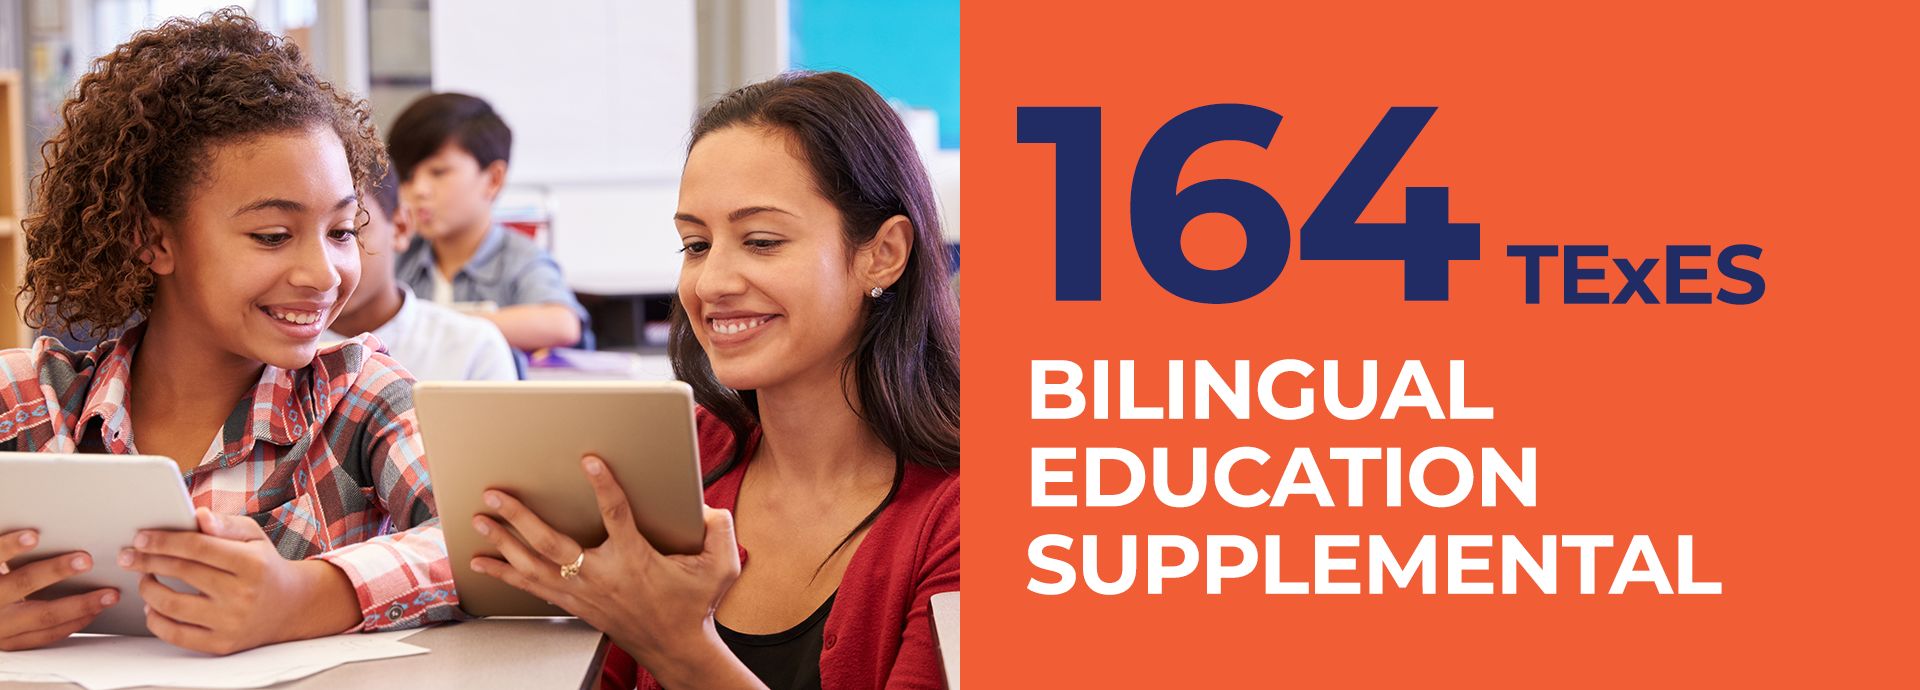 164 TExES - Bilingual Education Supplemental